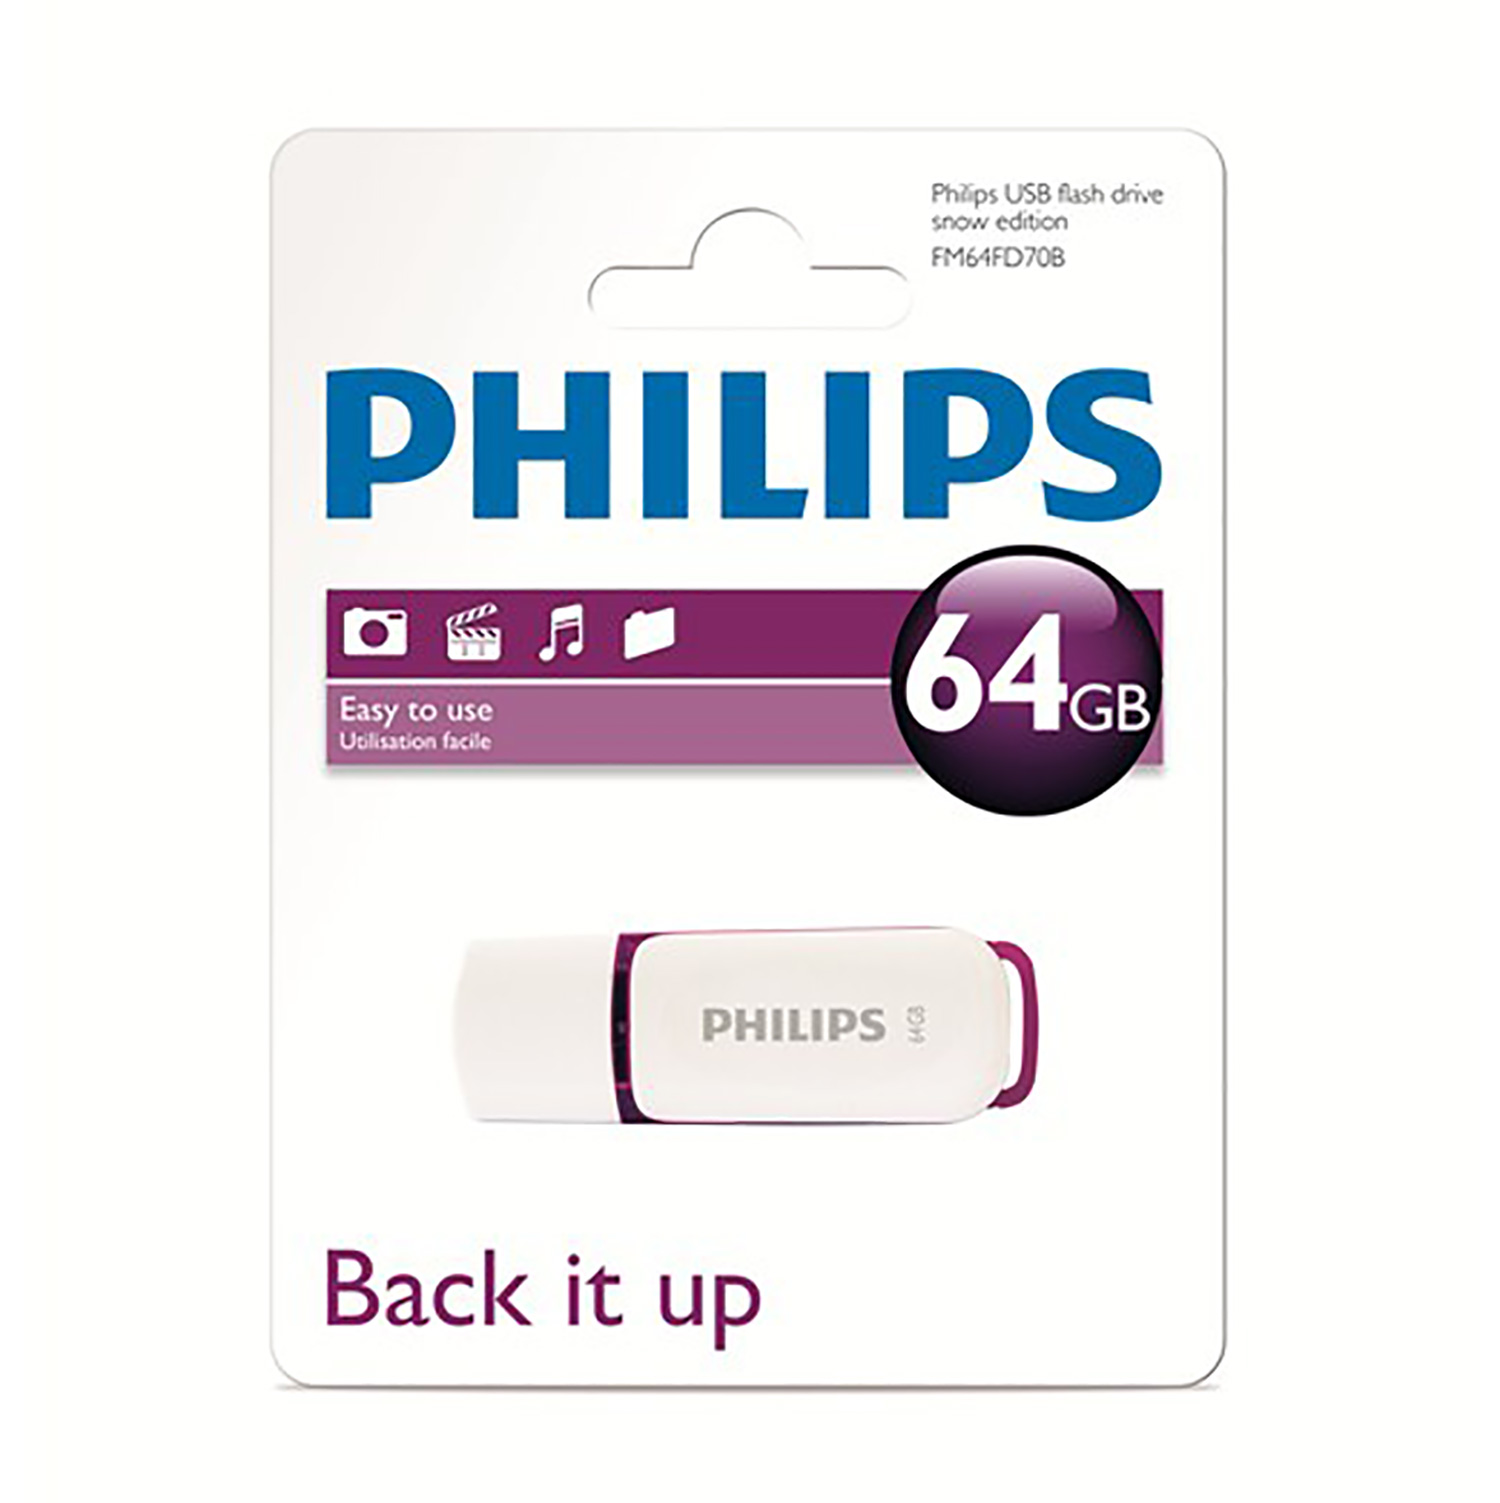 Philips USB 2.0 Flash Drive - Snow Series - 64GB